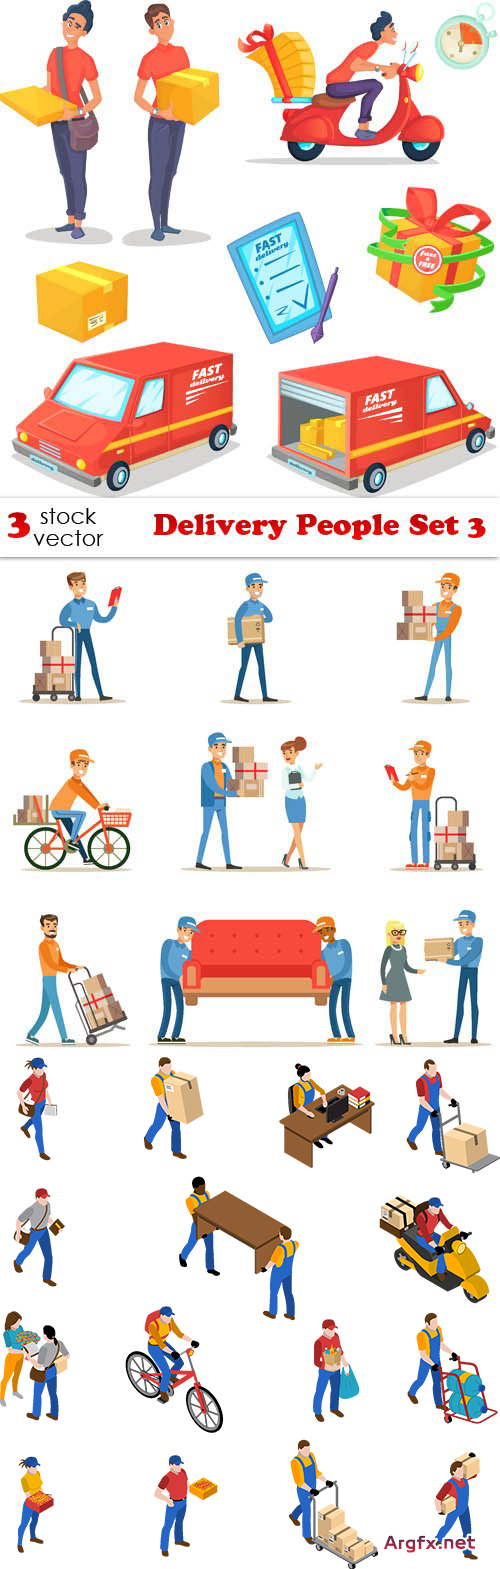 Vectors - Delivery People Set 3